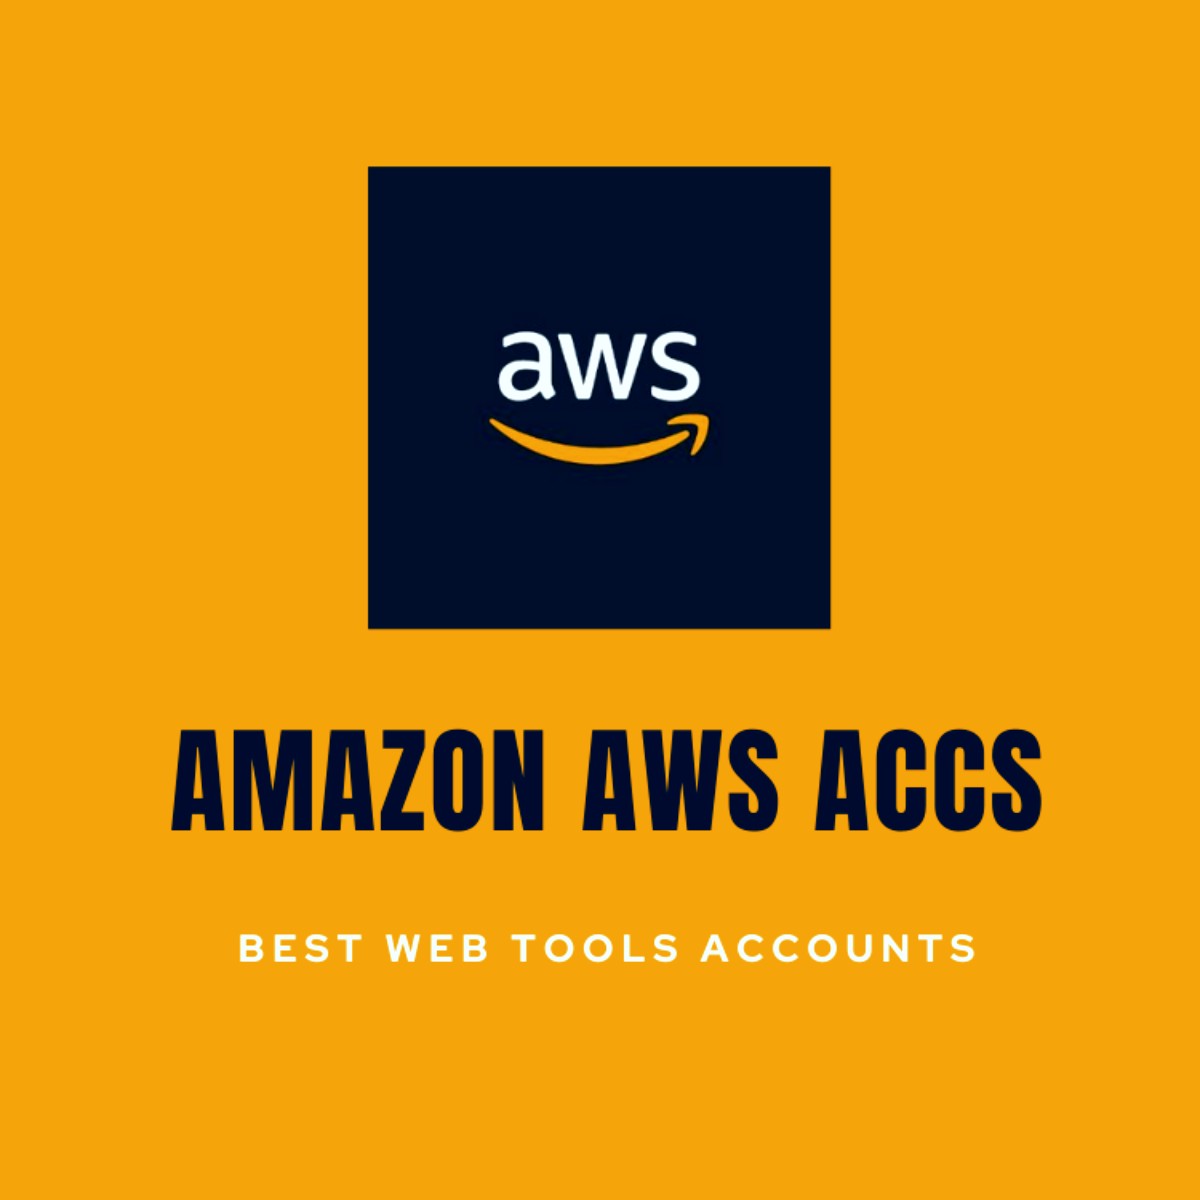 Buy an Amazon AWS Account on Sale